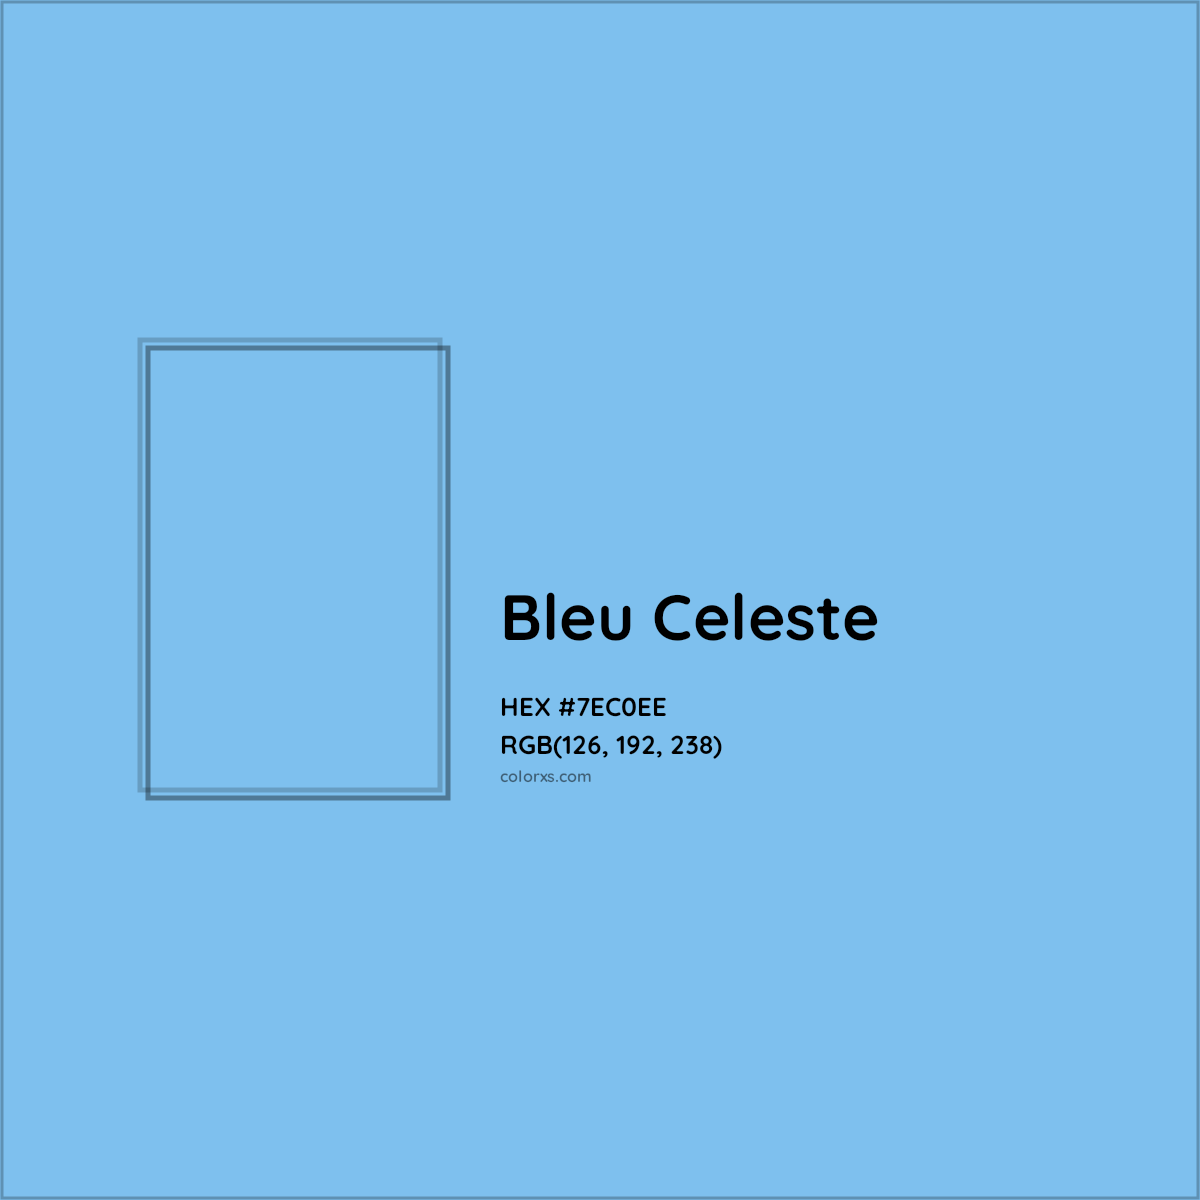 About Bleu Celeste - Color meaning, codes, similar colors and paints 